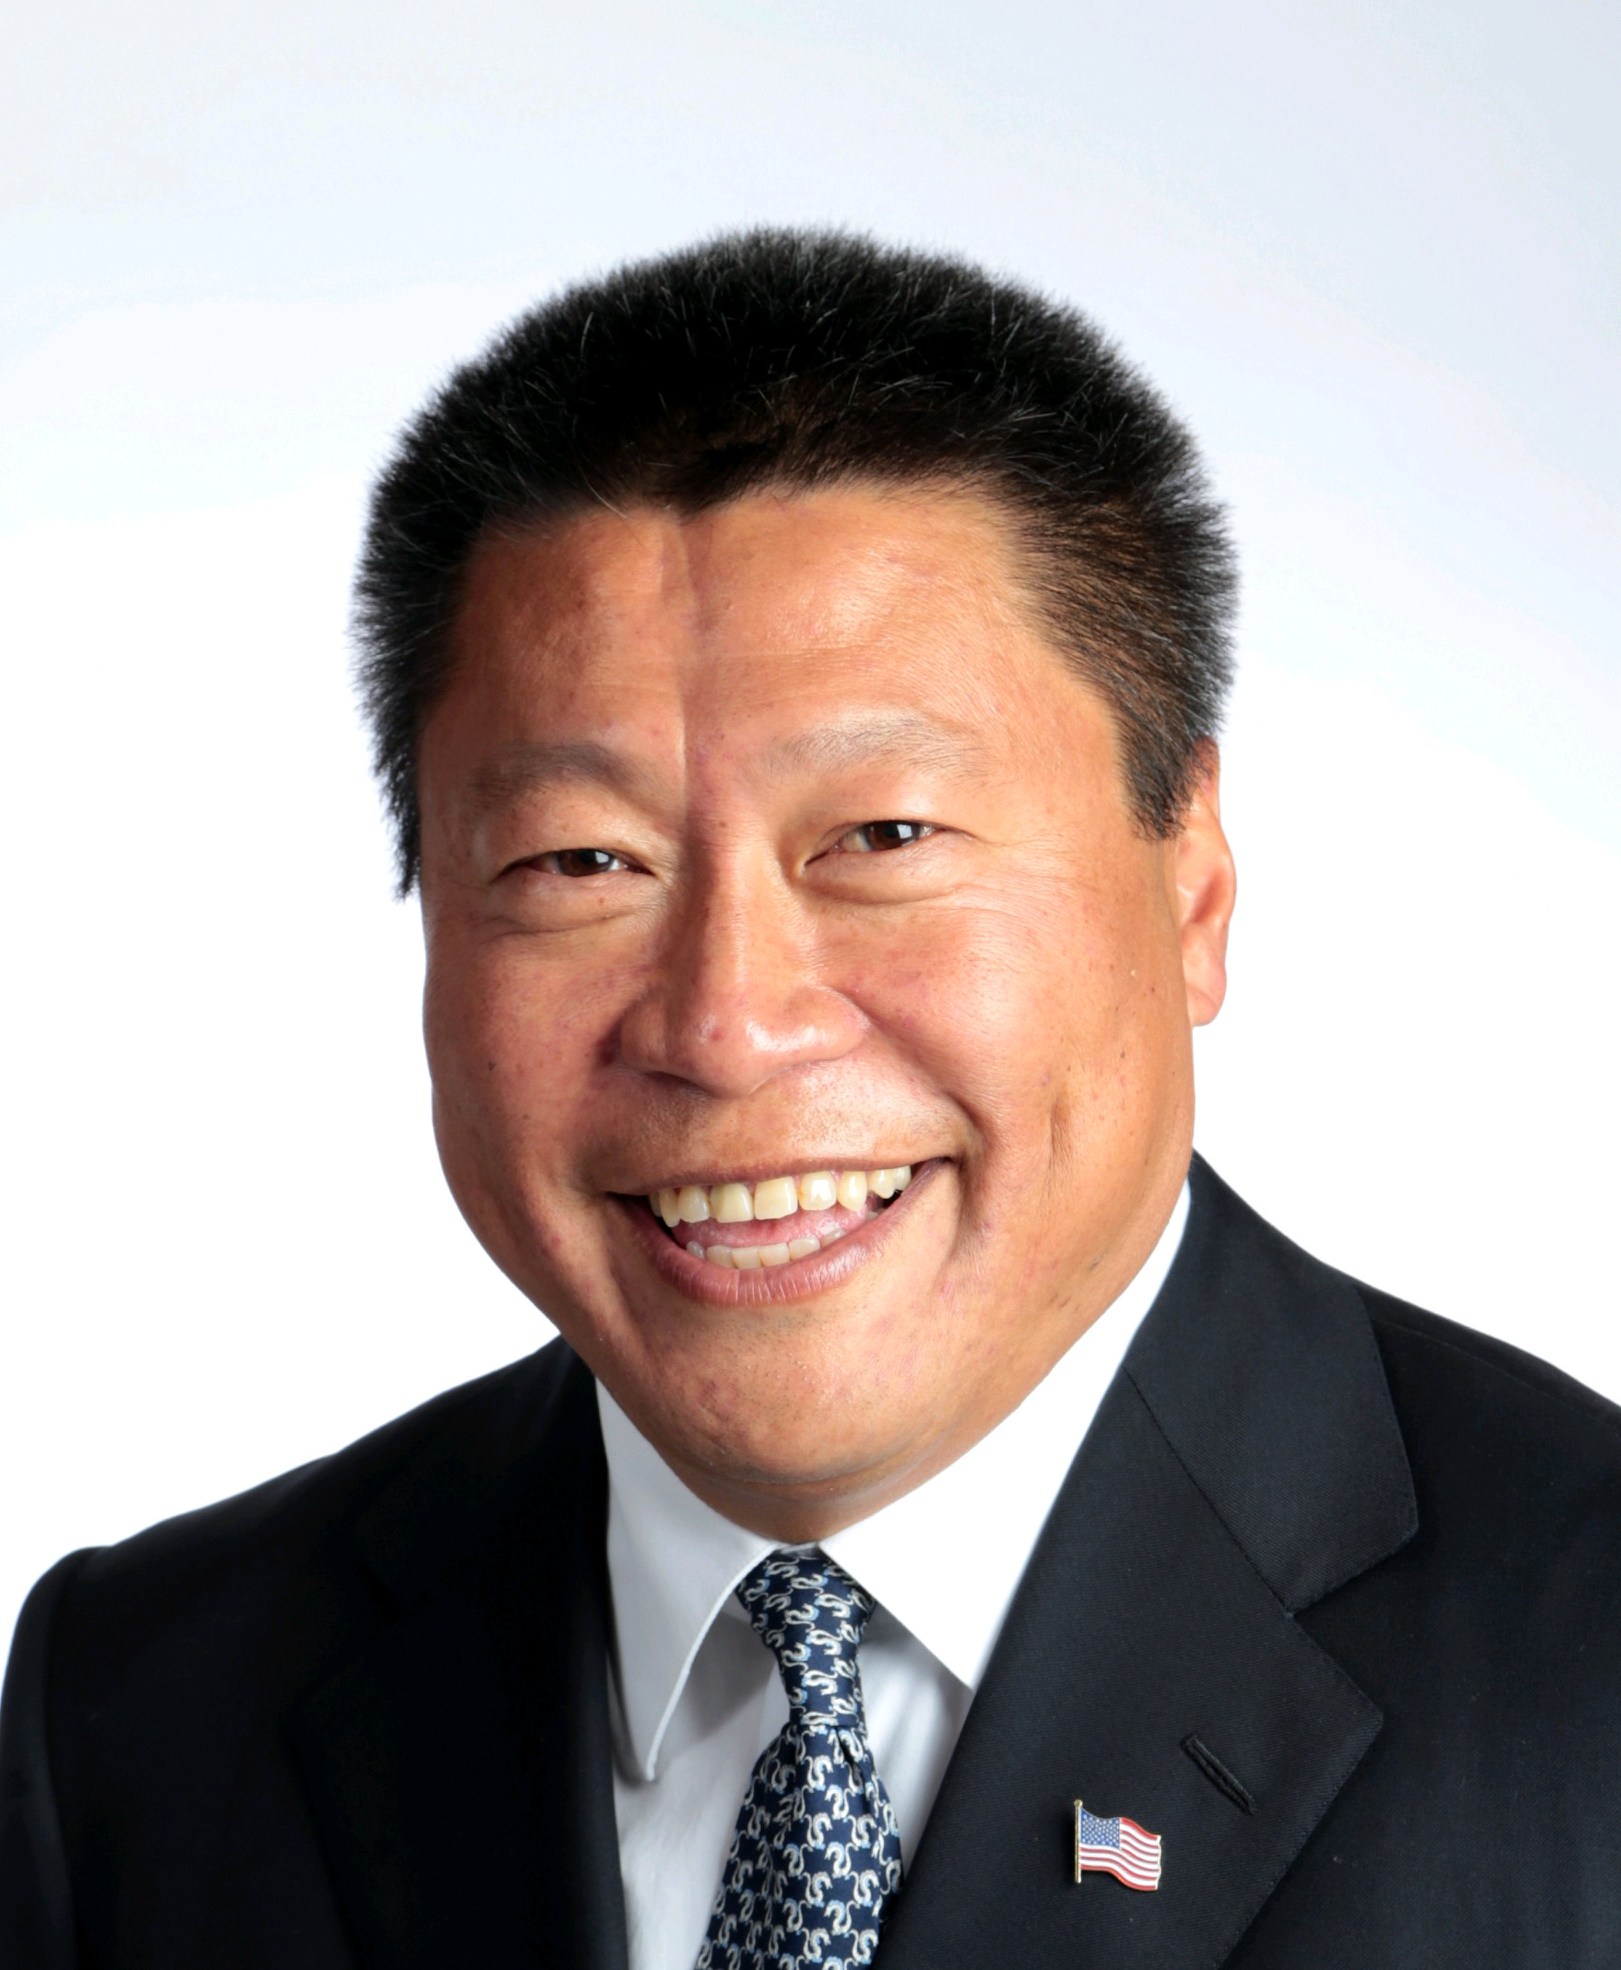 State Senator Tony Hwang - 28th CT State Senate District